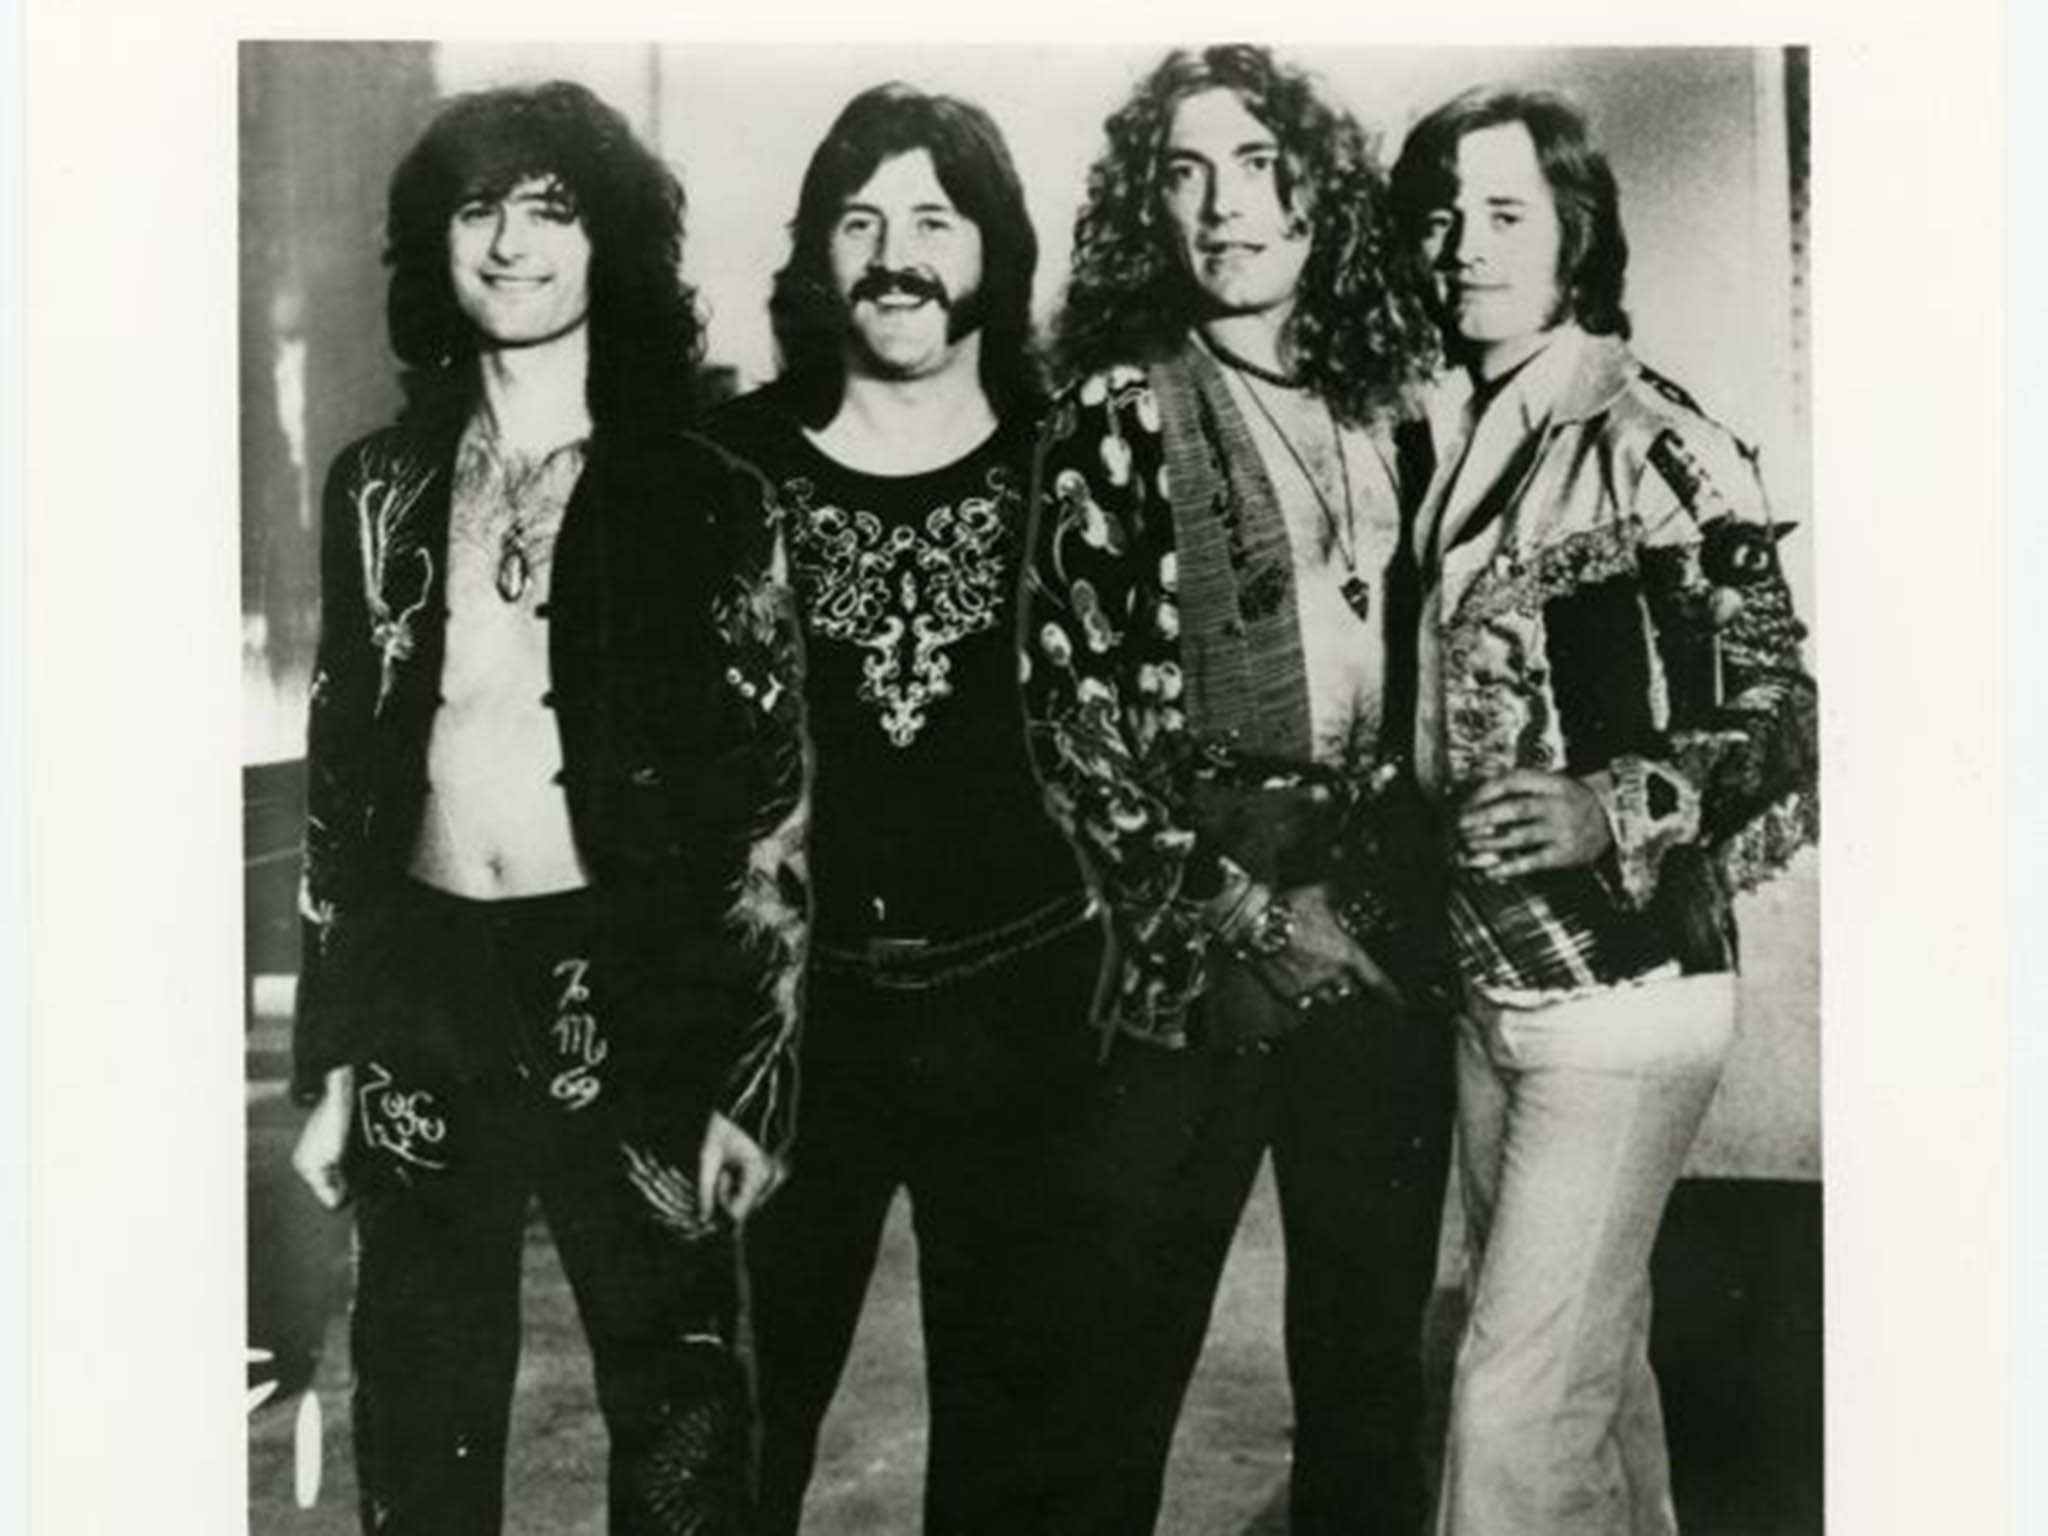 Jimmy Page, John Bonham, Robert Plant and John Paul Jones of Led Zeppelin in 1975